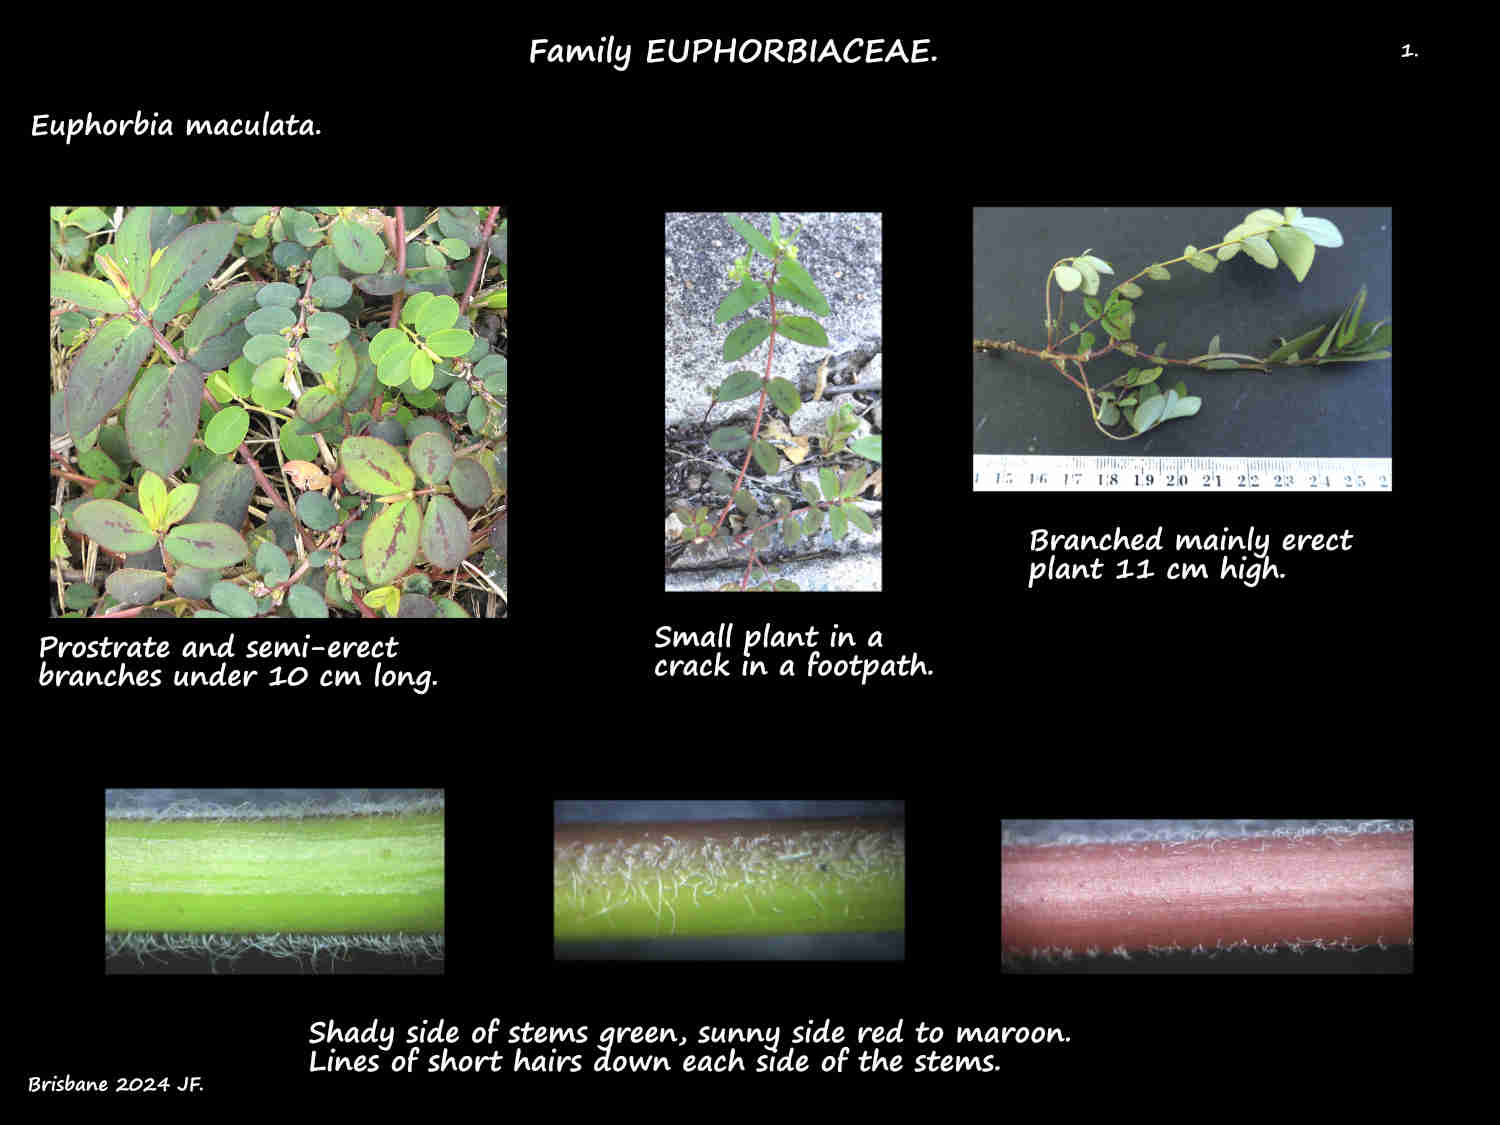 1 Euphorbia maculata plants & stems